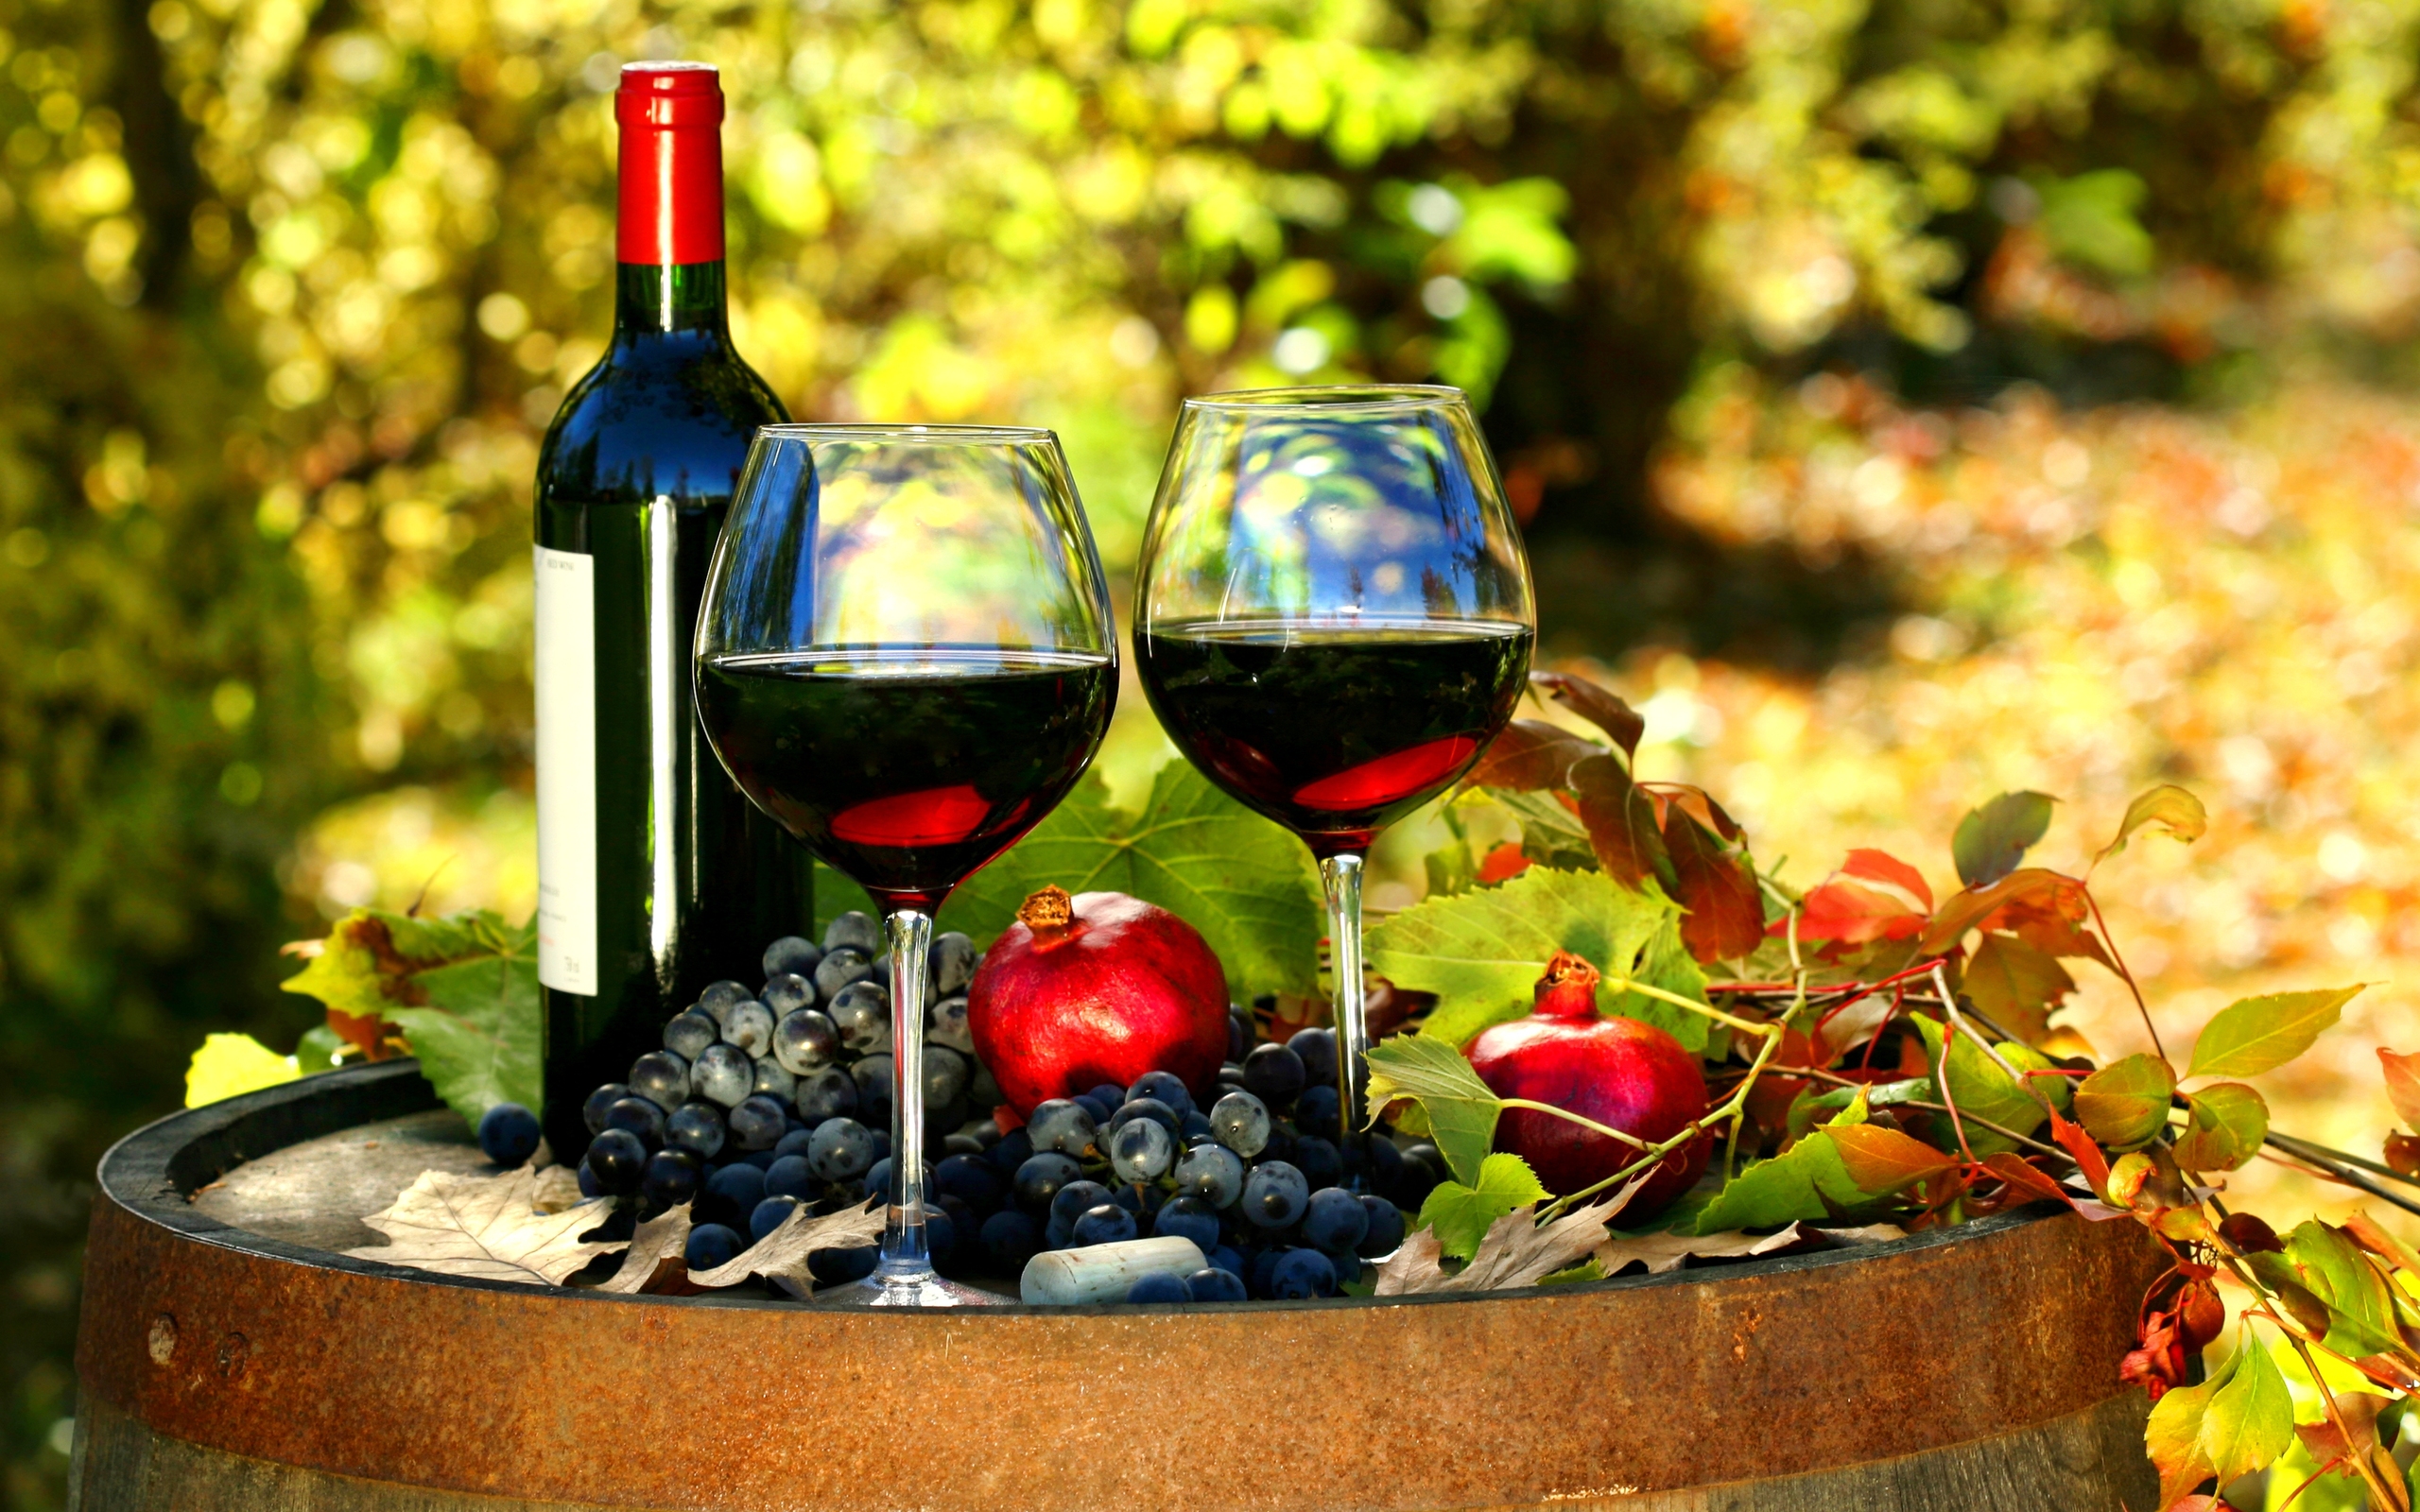 540611 descargar imagen alimento, vino, manzana, botella, uva, bodegón: fondos de pantalla y protectores de pantalla gratis